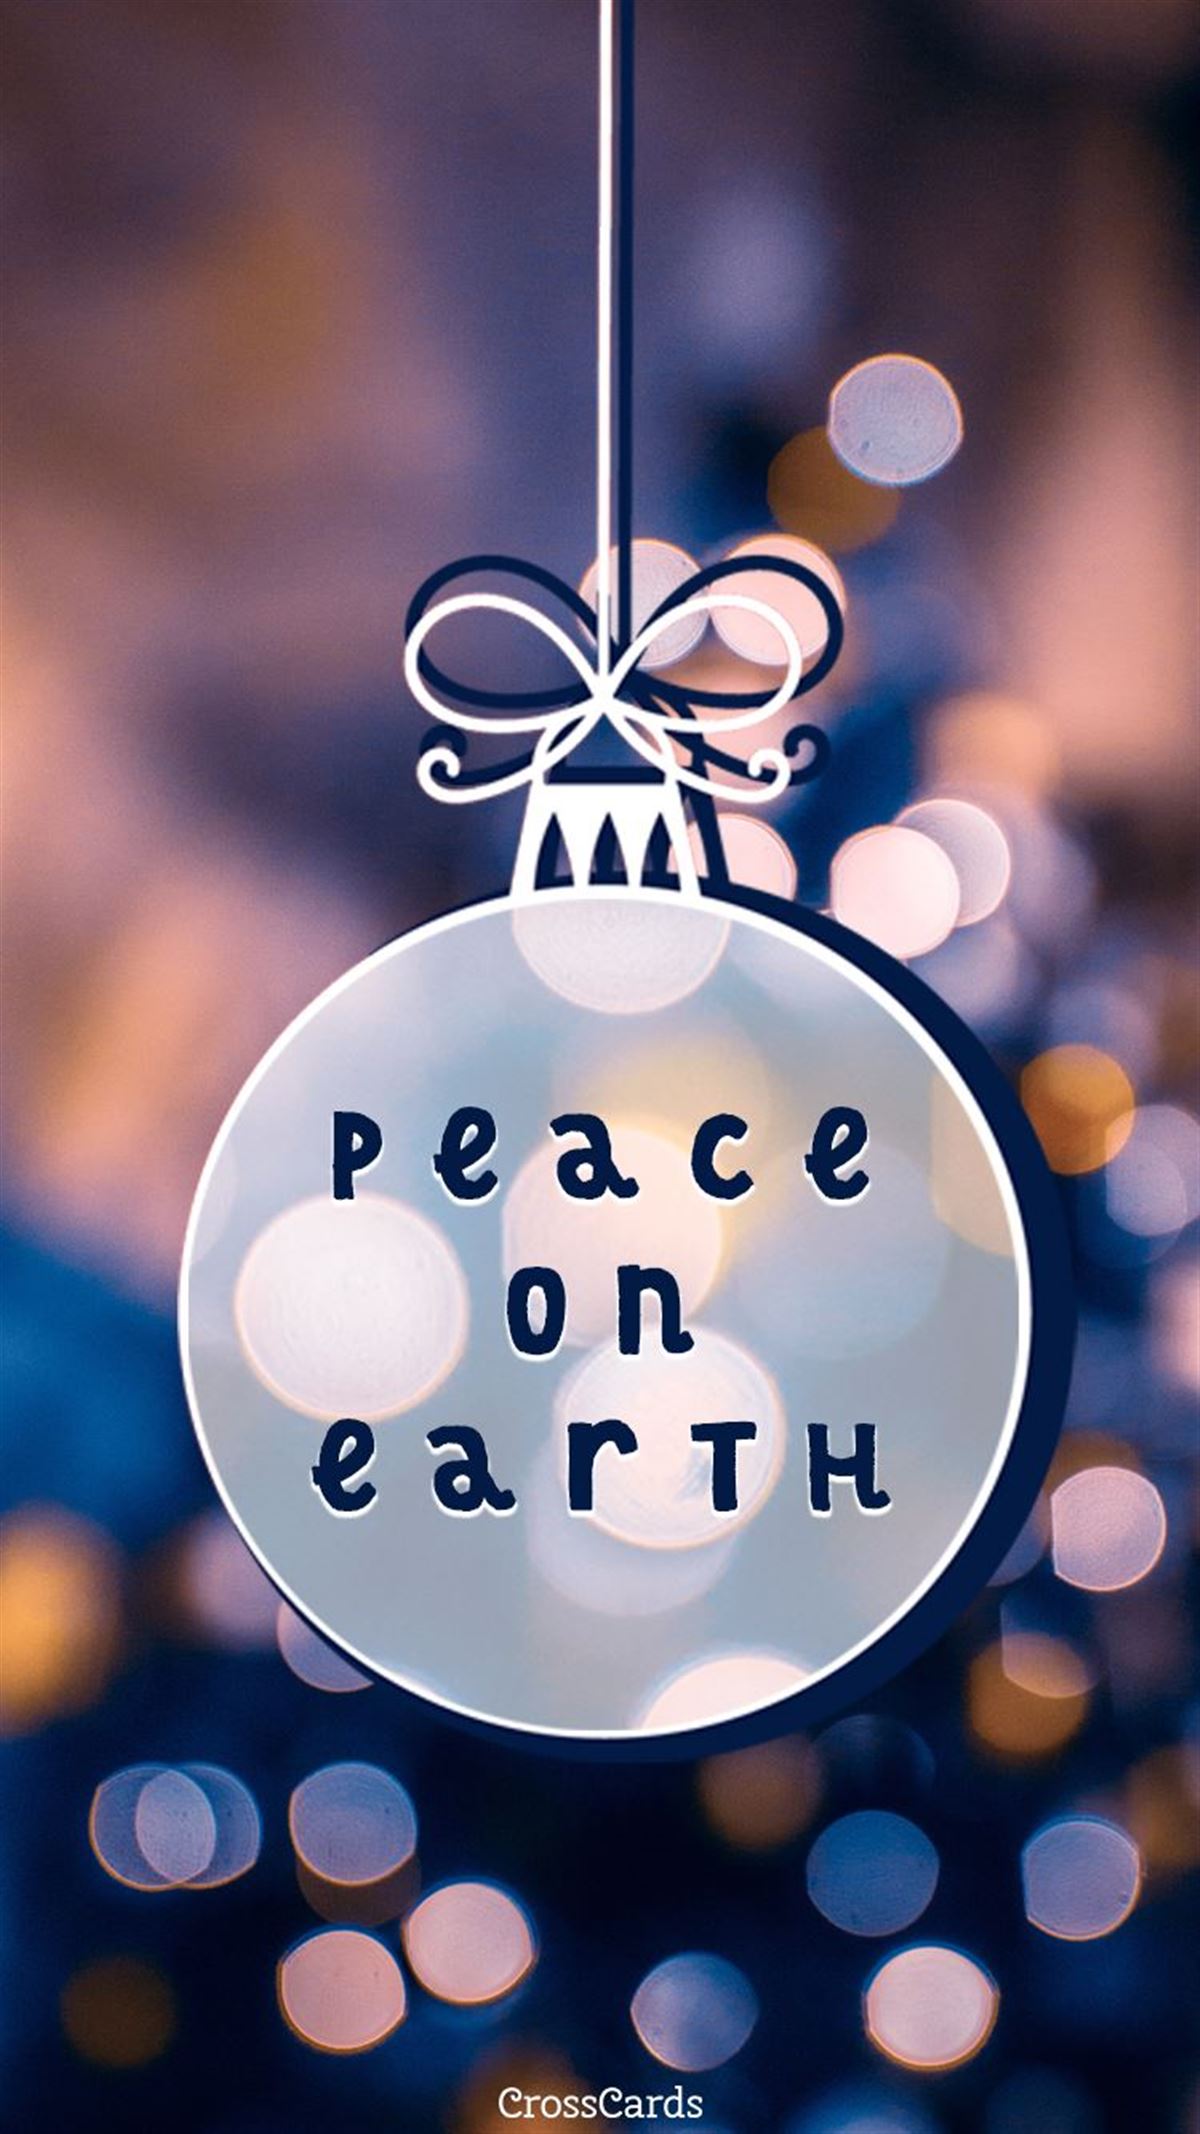 Peace on Earth mobile phone wallpaper